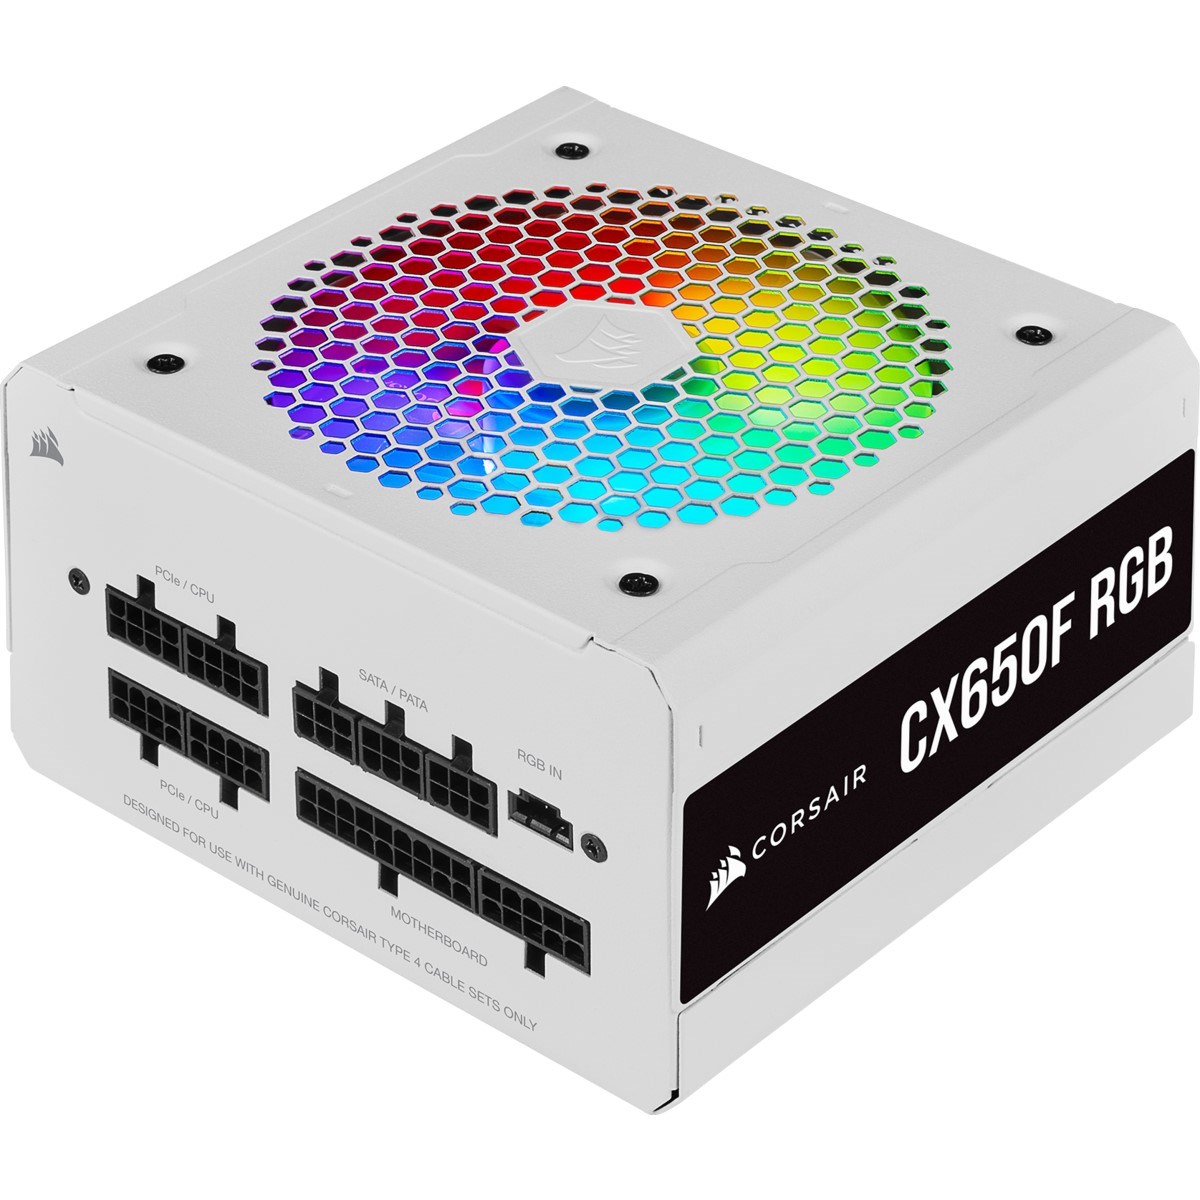 Corsair CP-9020226-EU CX650F RGB 650 Watt Tam Modüler 80+ Bronz Güç Kaynağı Beyaz